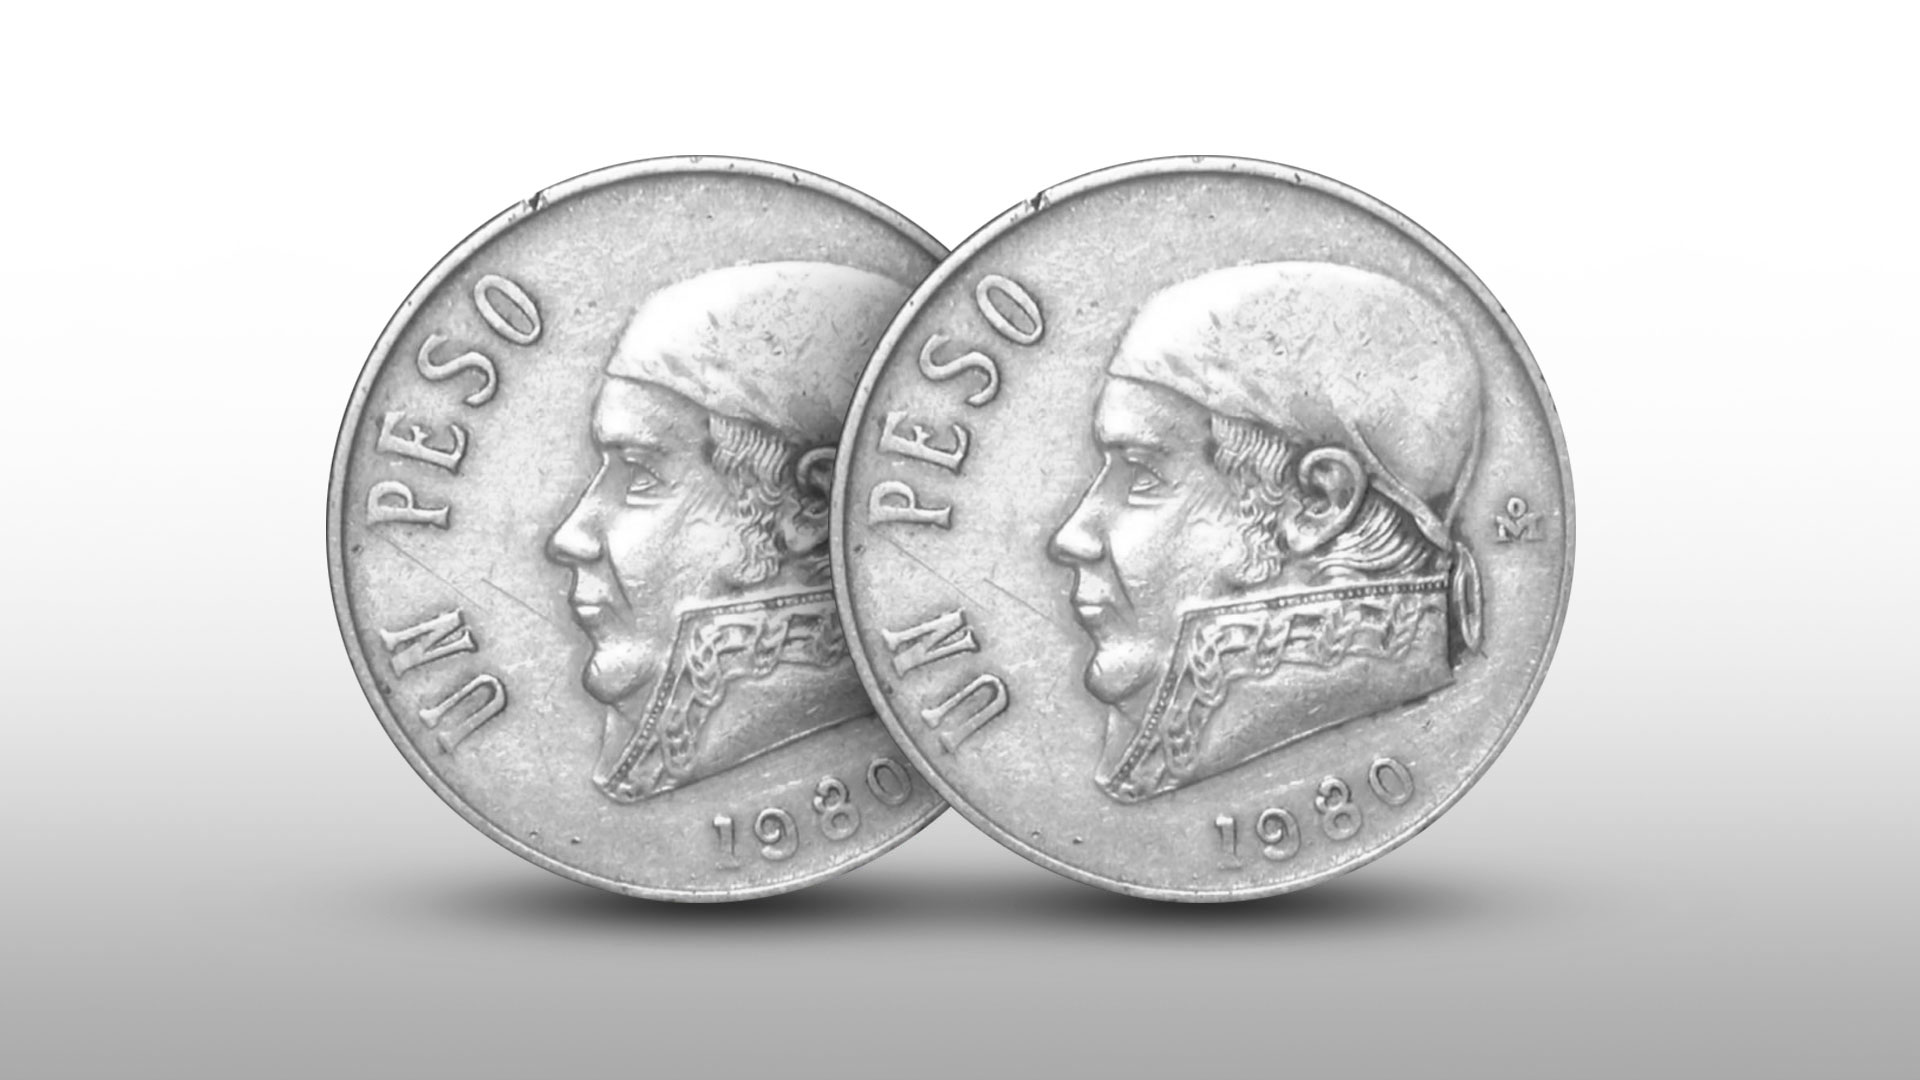 Resultados da busca por: 'moeda jose © markka morelos 1 peso a